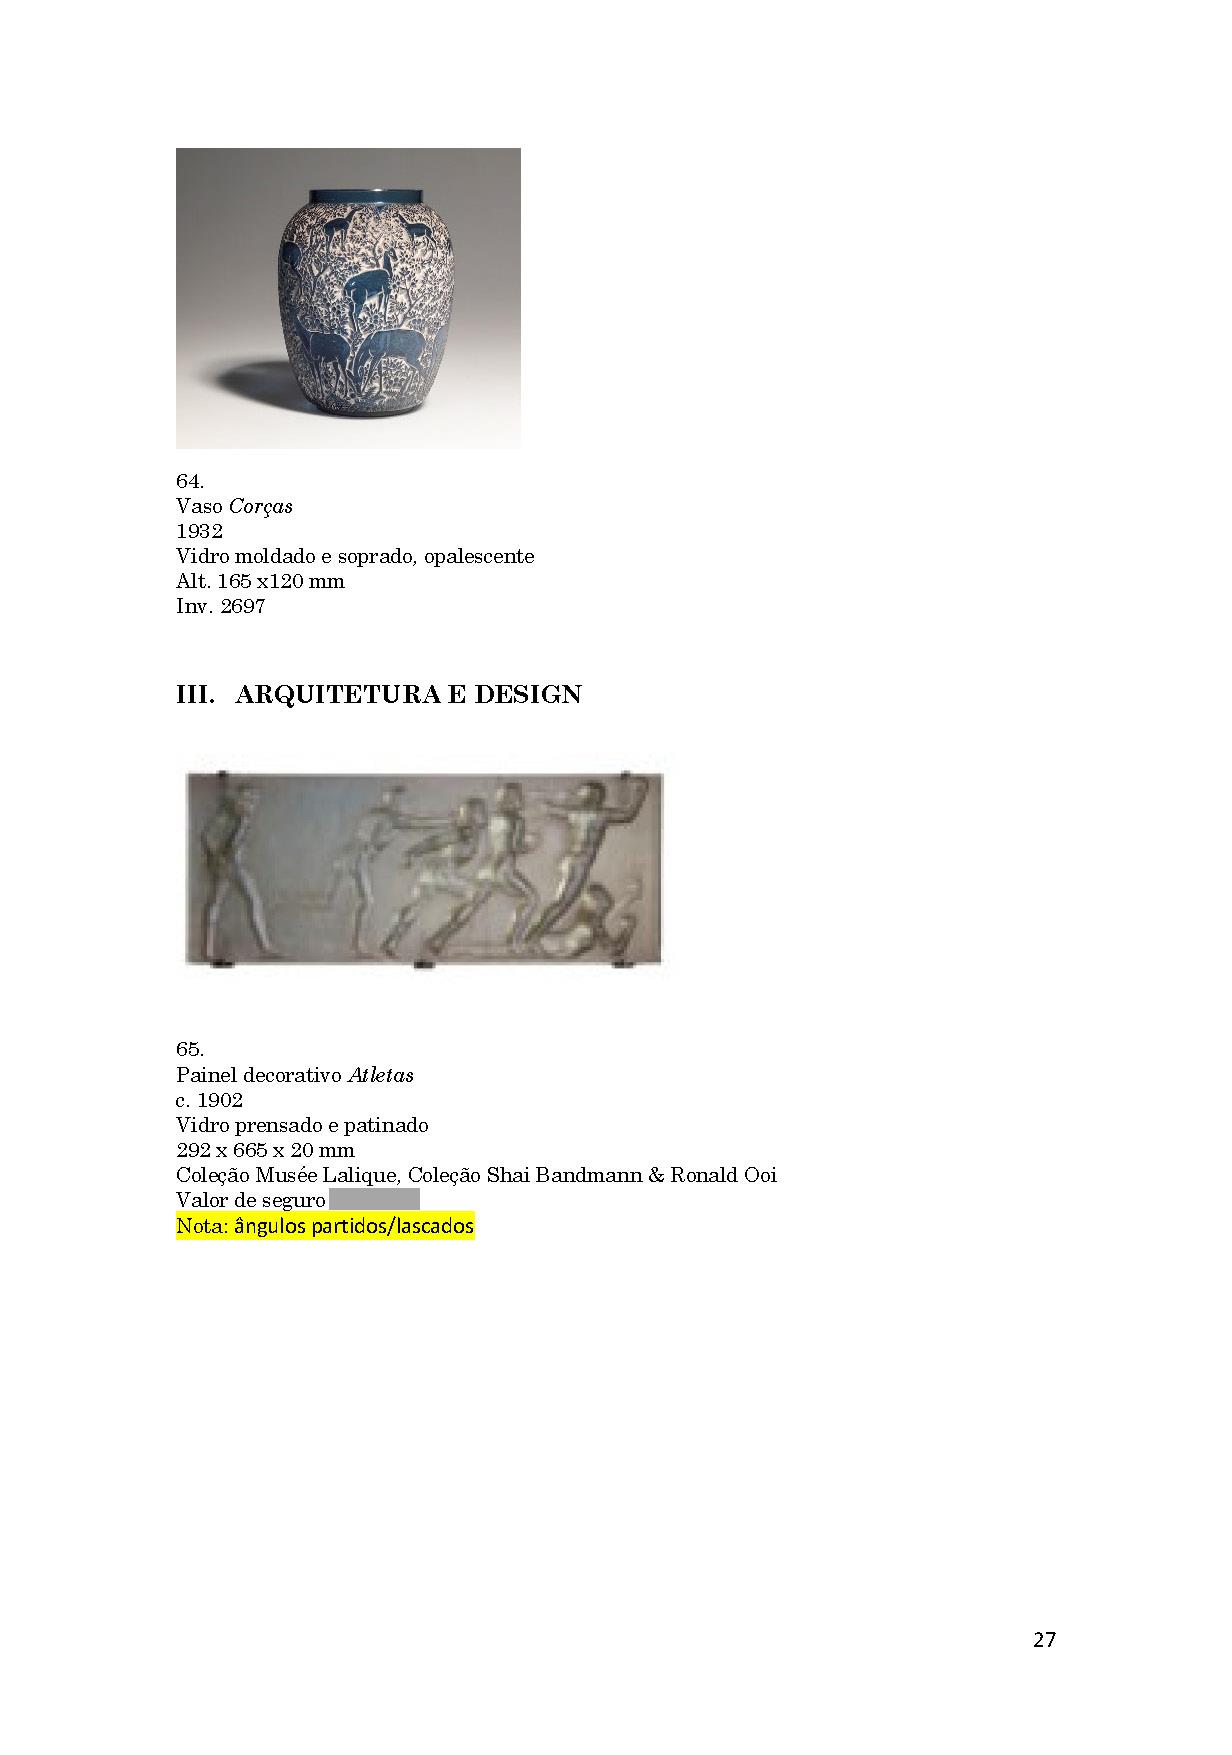 Lista_Vidros_Lalique_25.09.2020_1.27